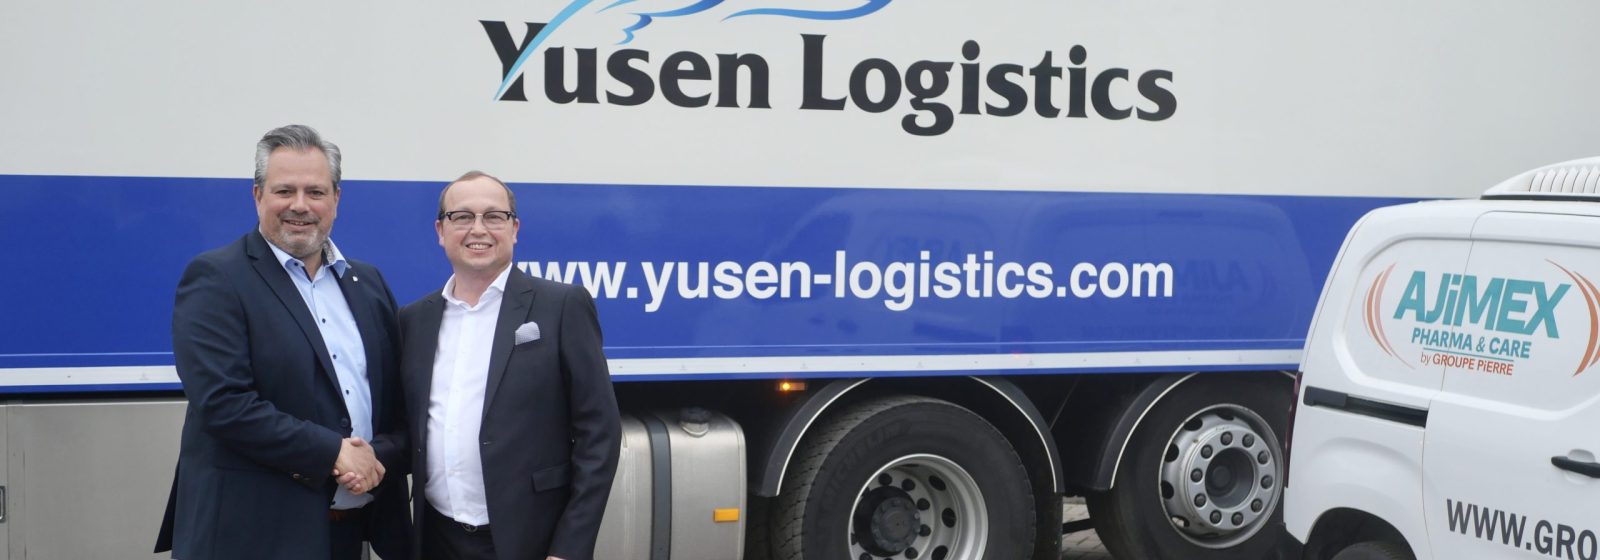 Yusen Logistics overname Group Pierre